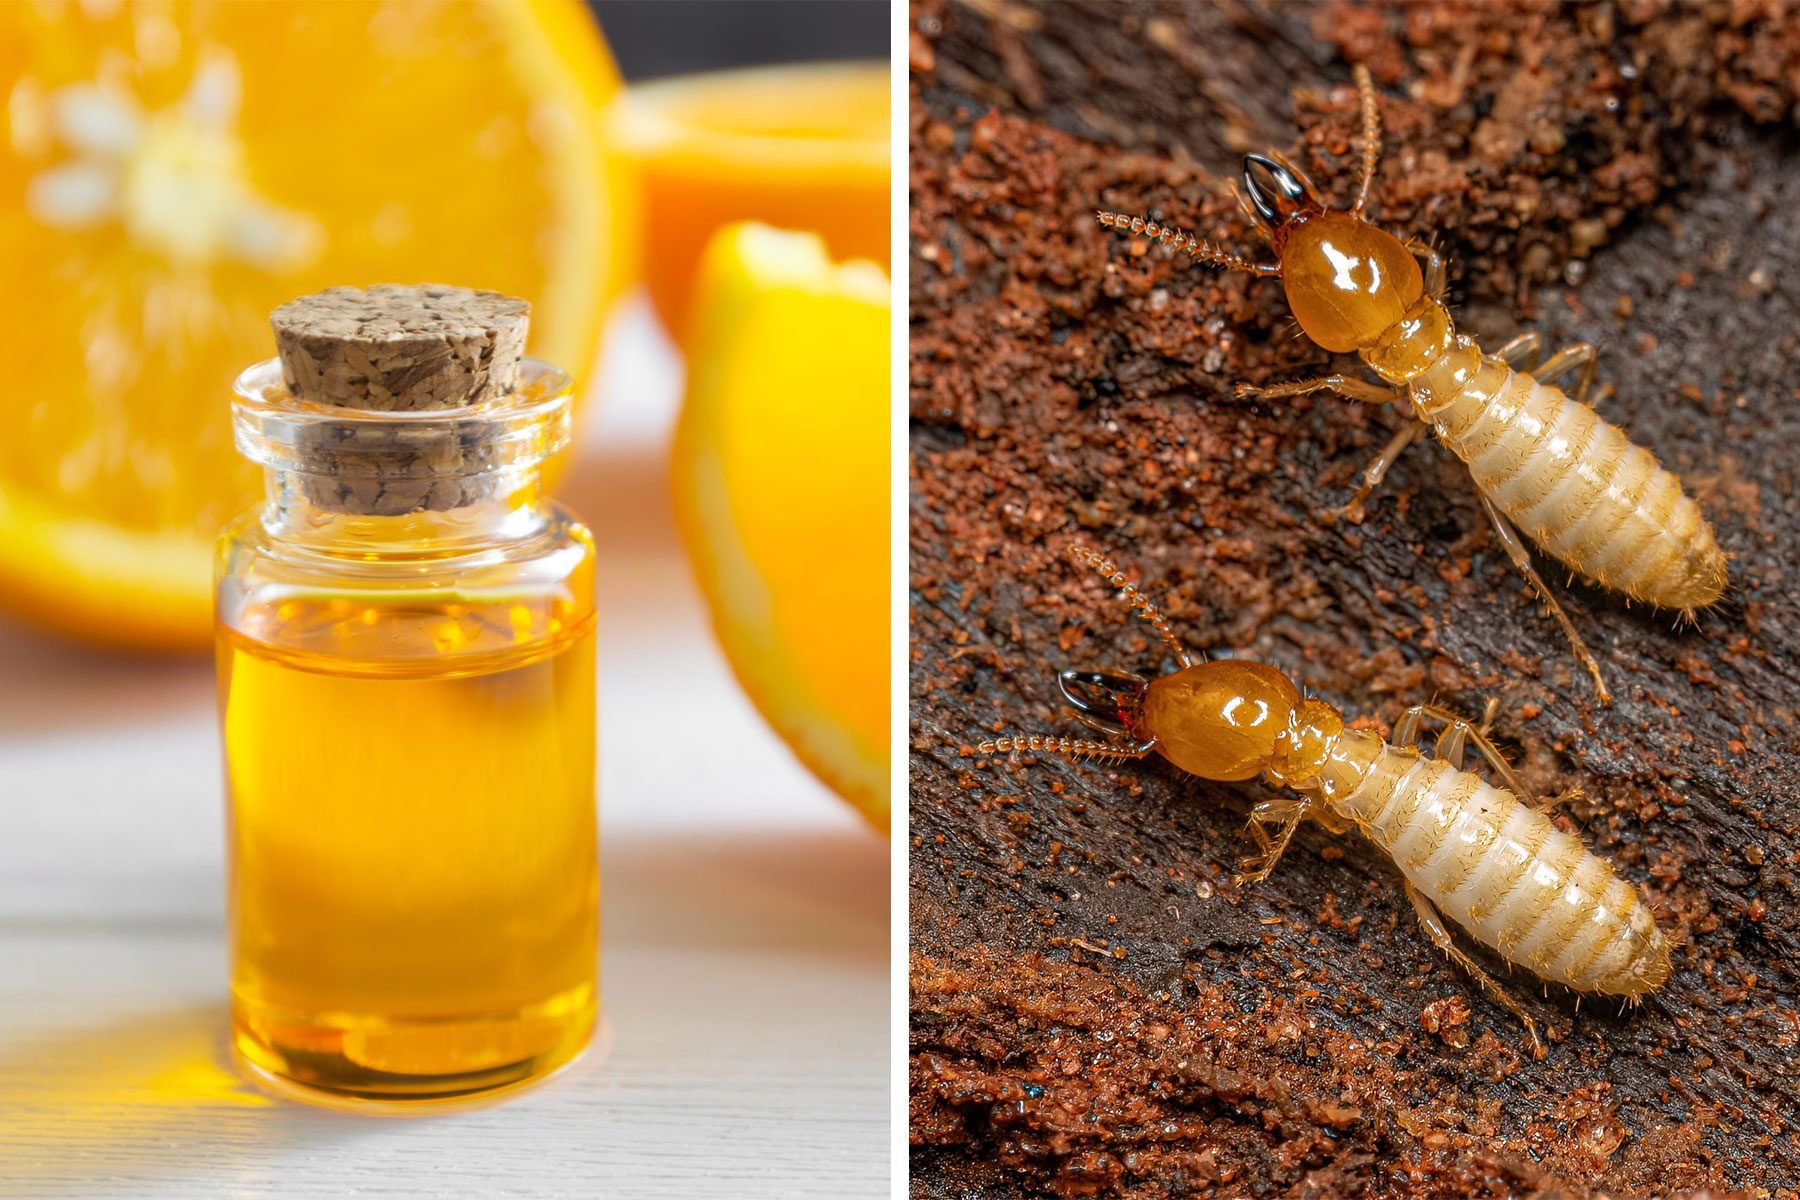 Should You Use Orange Oil to Treat Termites?